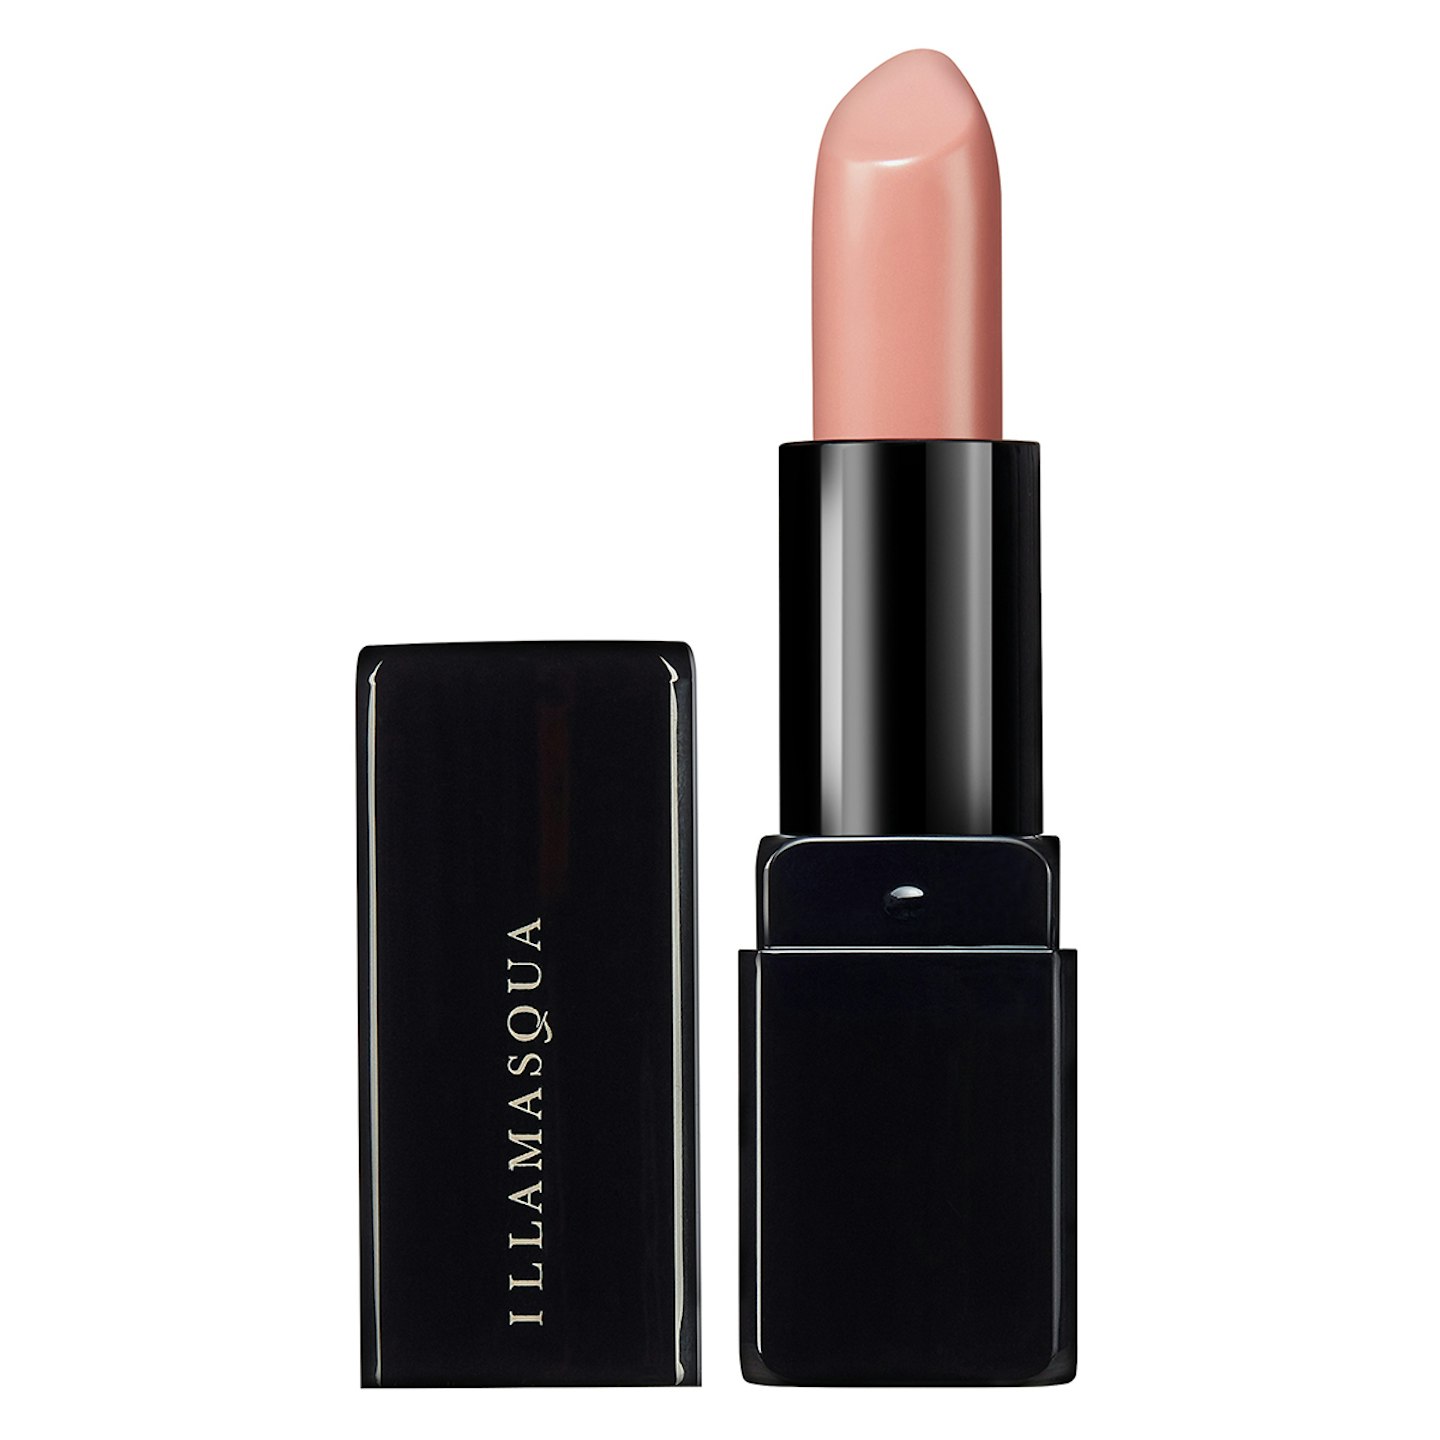 Illamasqua Nude Revolution Antimatter Lipstick, £20